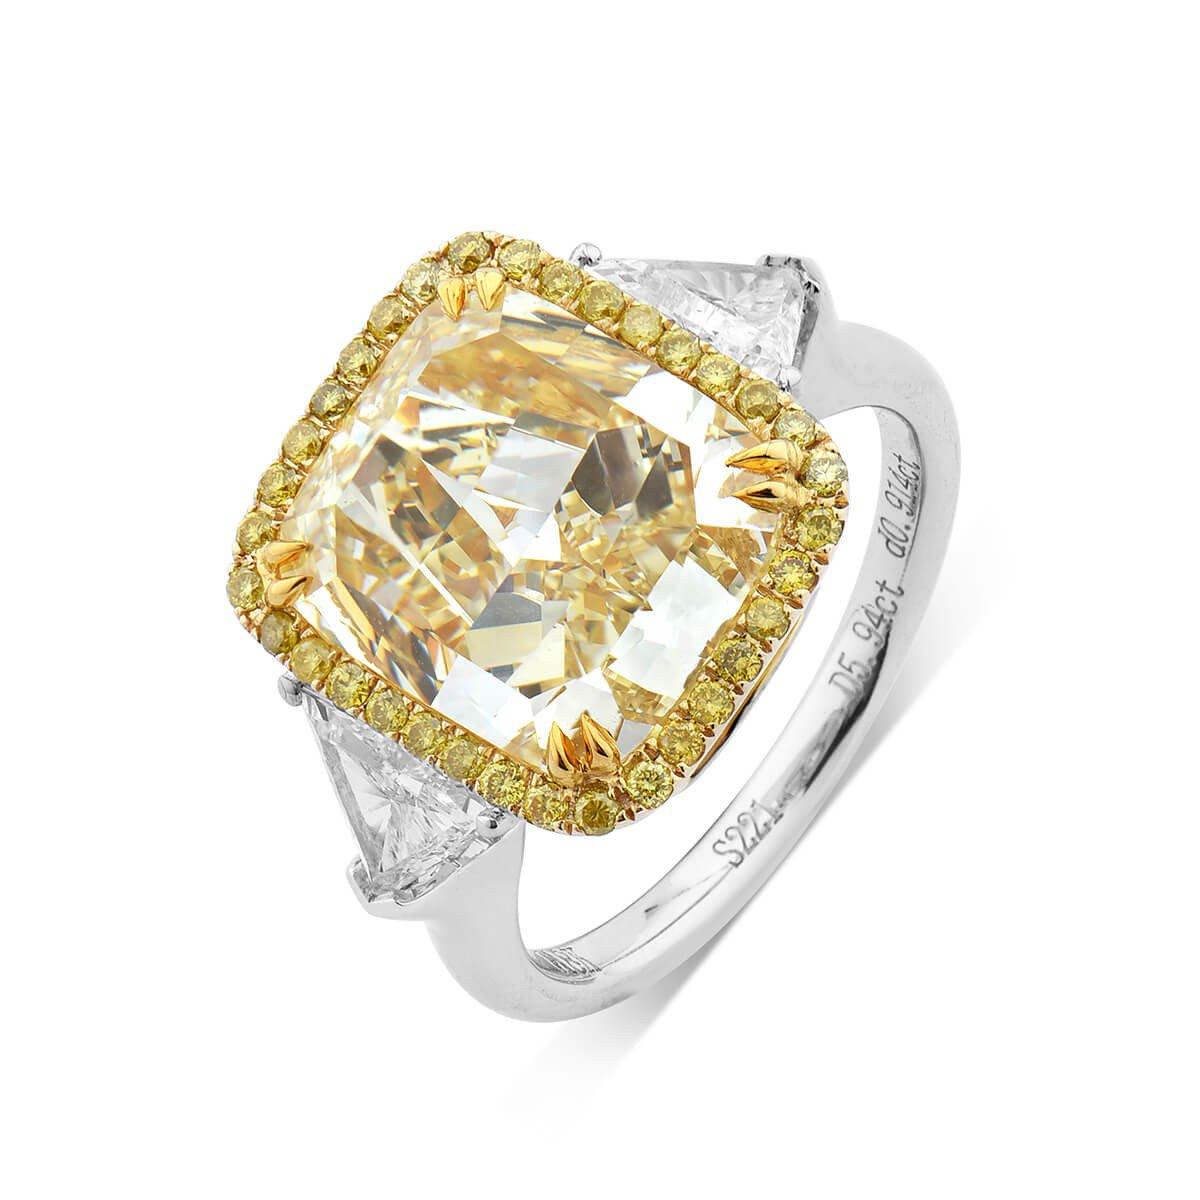 WHITE GOLD CUSHION CUT FANCY YELLOW DIAMOND RING - 6.85


Set in 18K White Gold


Total yellow diamond weight: 5.94 ct
[ 1 diamond ]
Color: Fancy yellow
Clarity: VVS2

Total trilliant cut white diamond weight: 0.68 ct
[ 2 diamonds ]
Color: